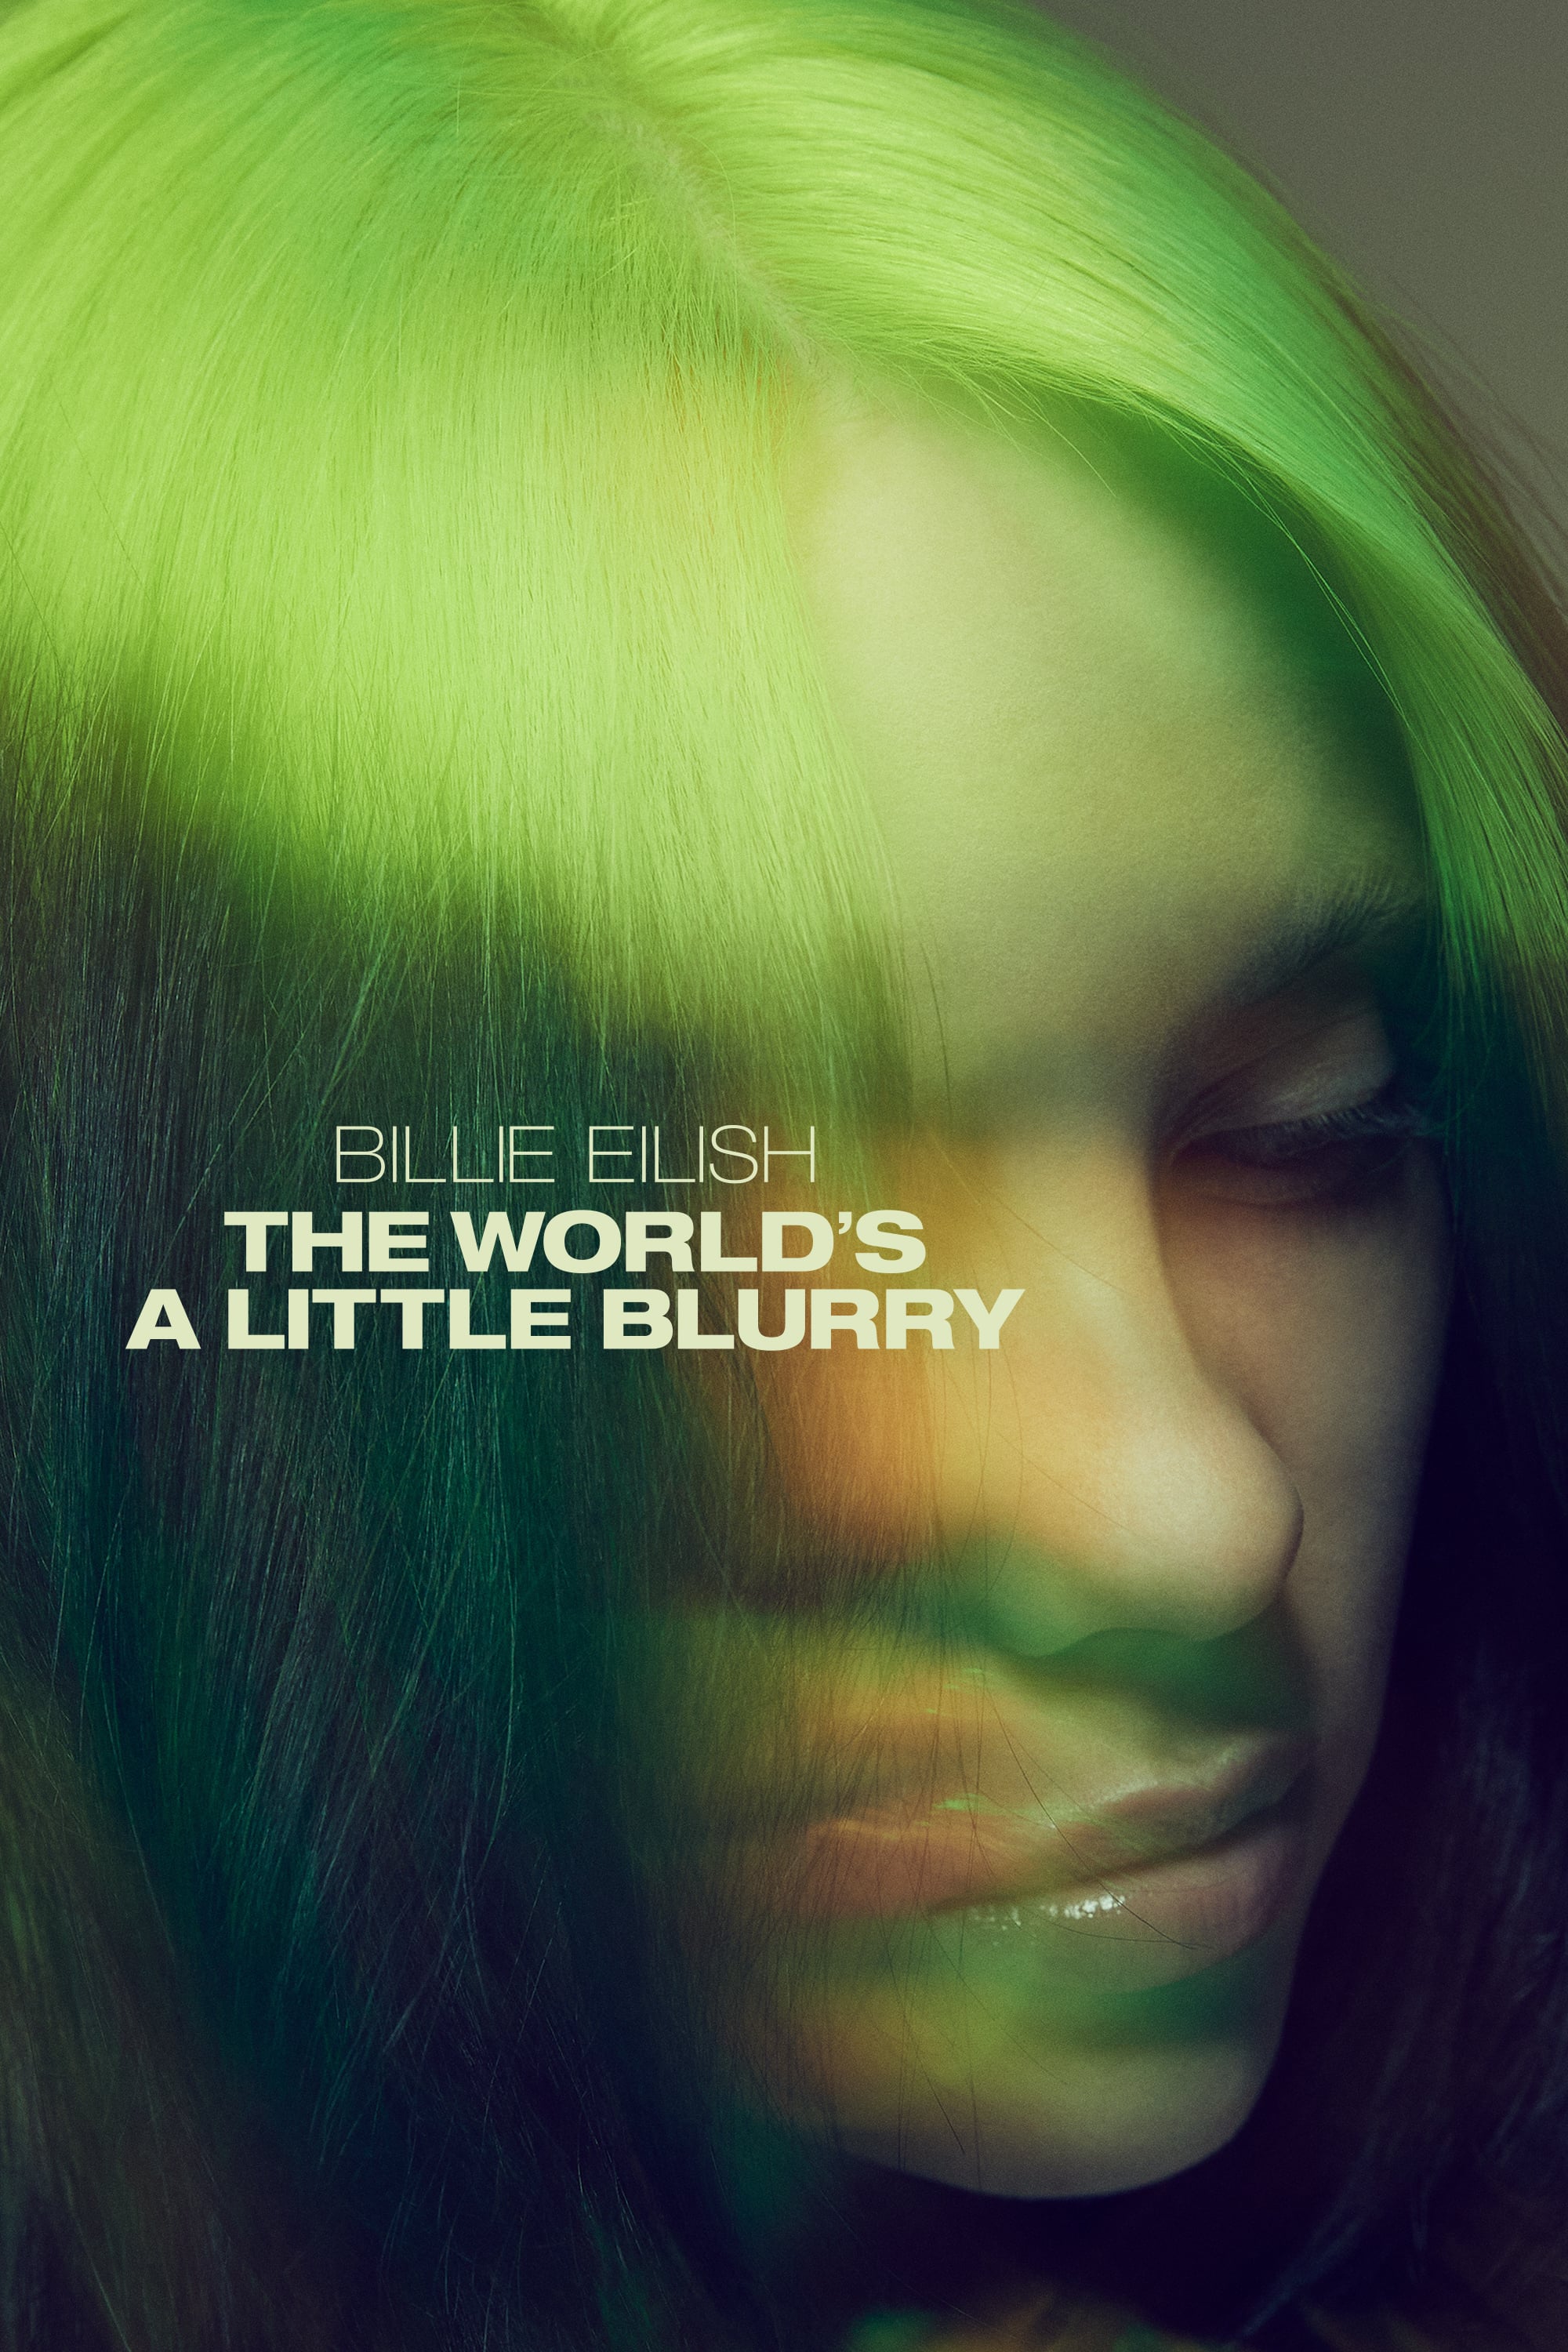 Billie Eilish: The World's a Little Blurry (2021)